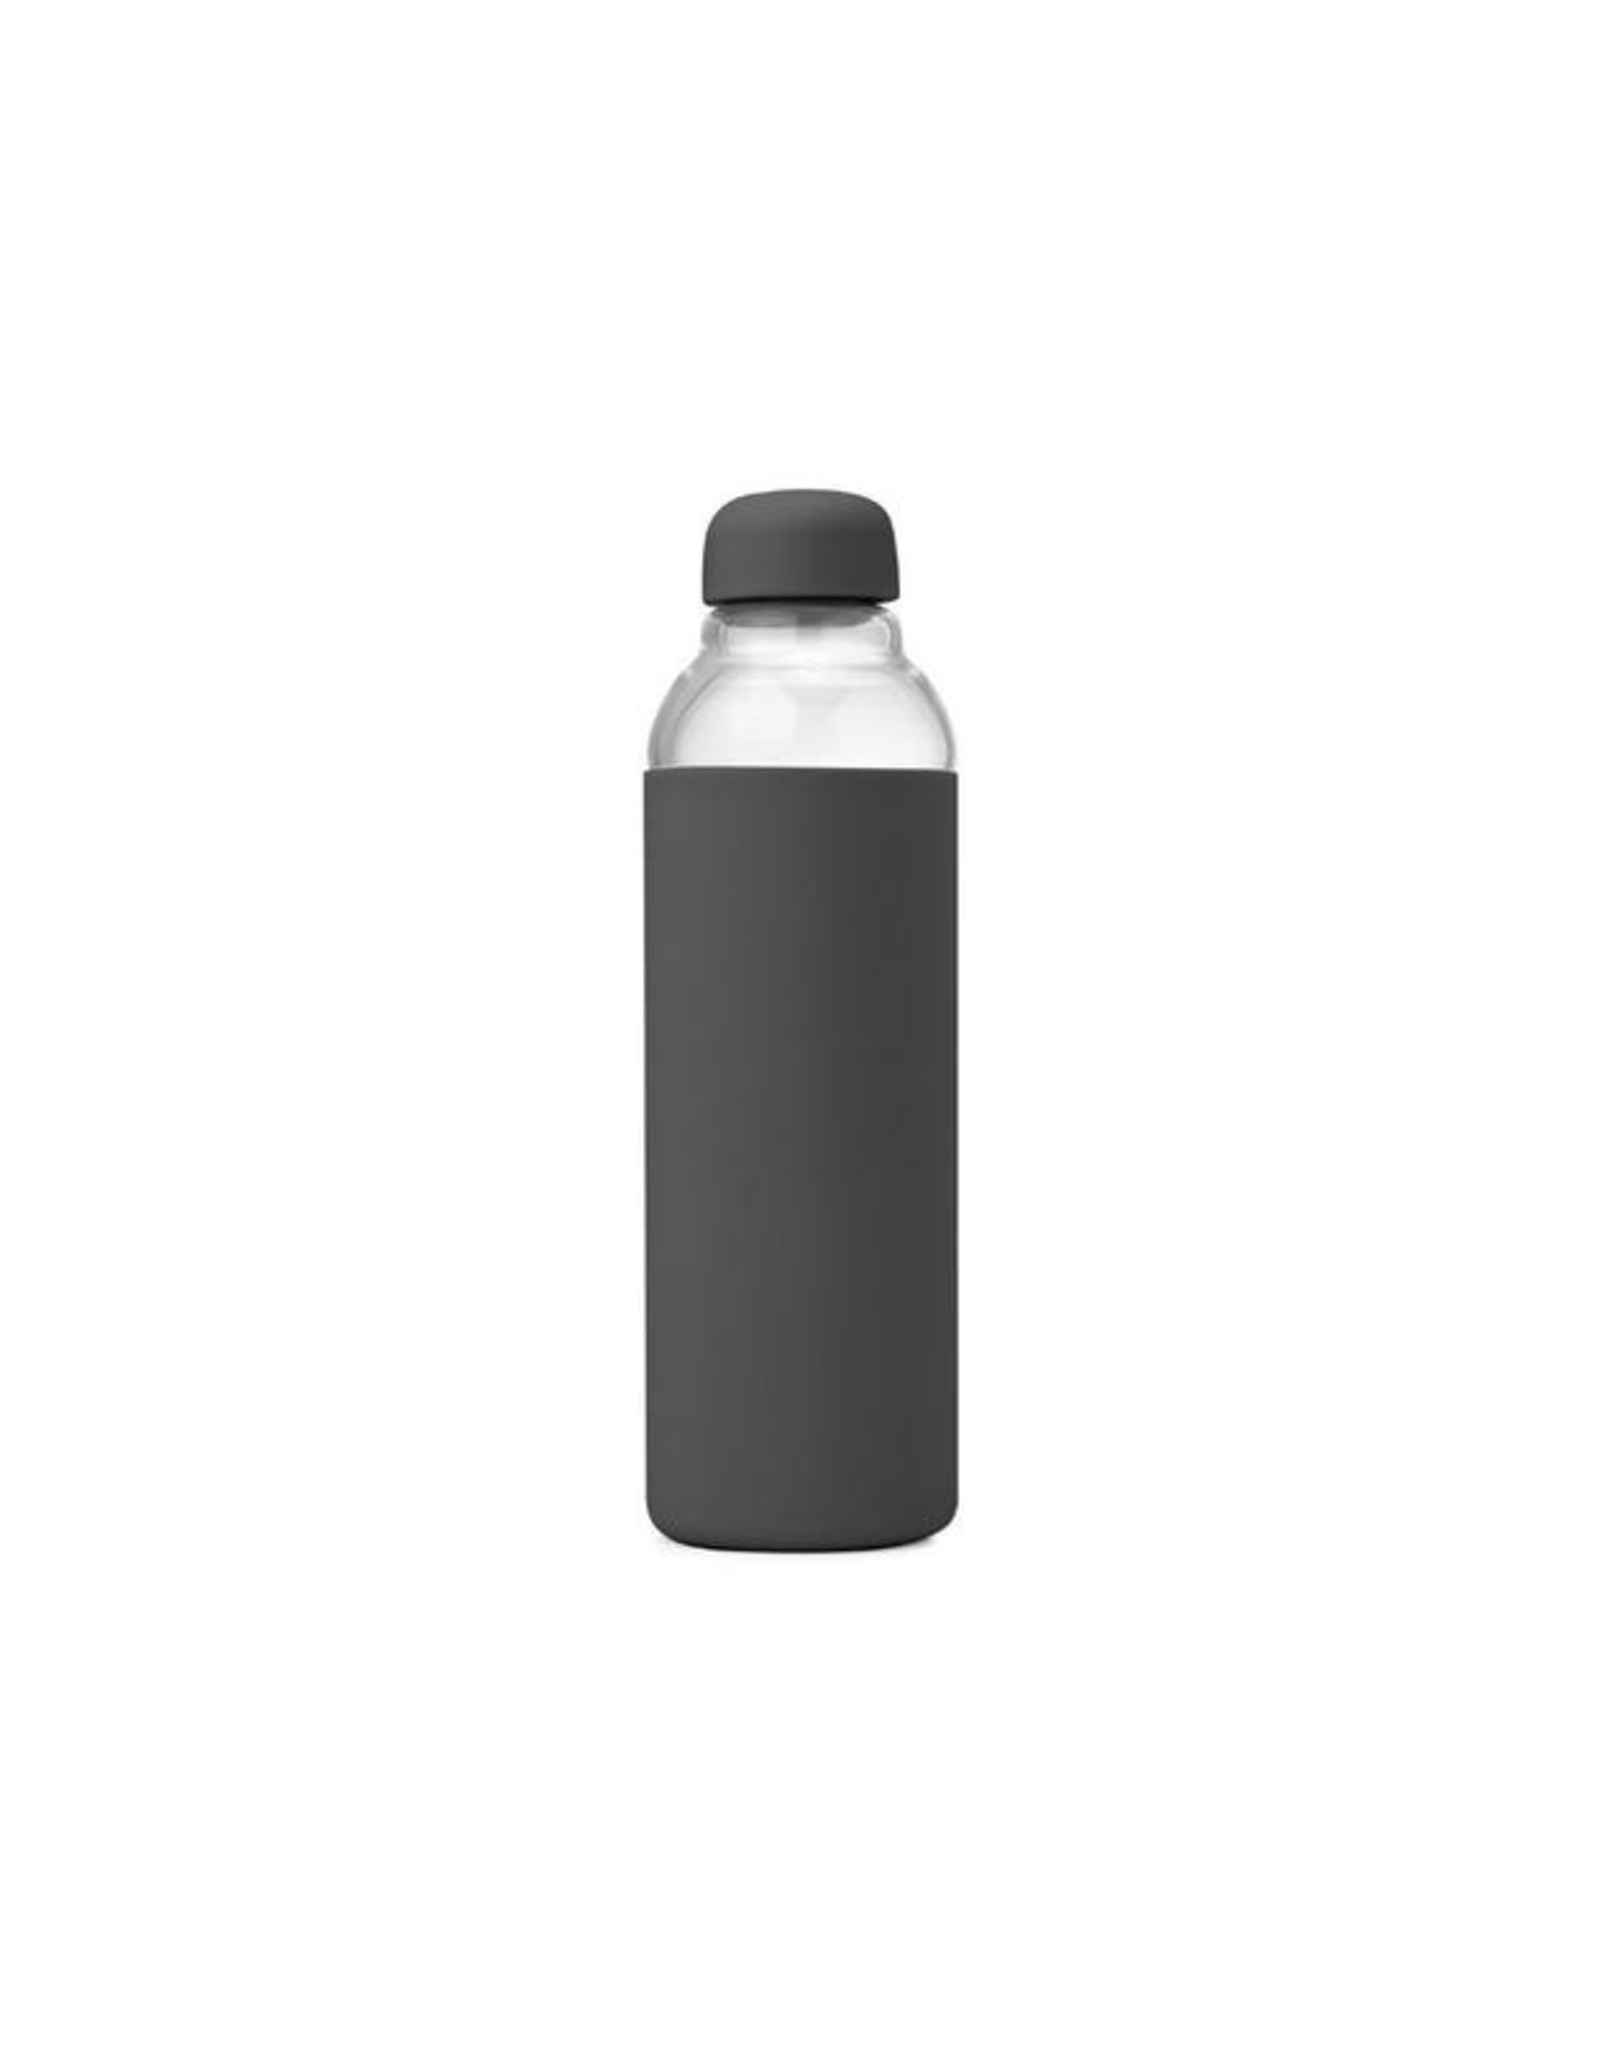 W&P Design Porter Water Bottle